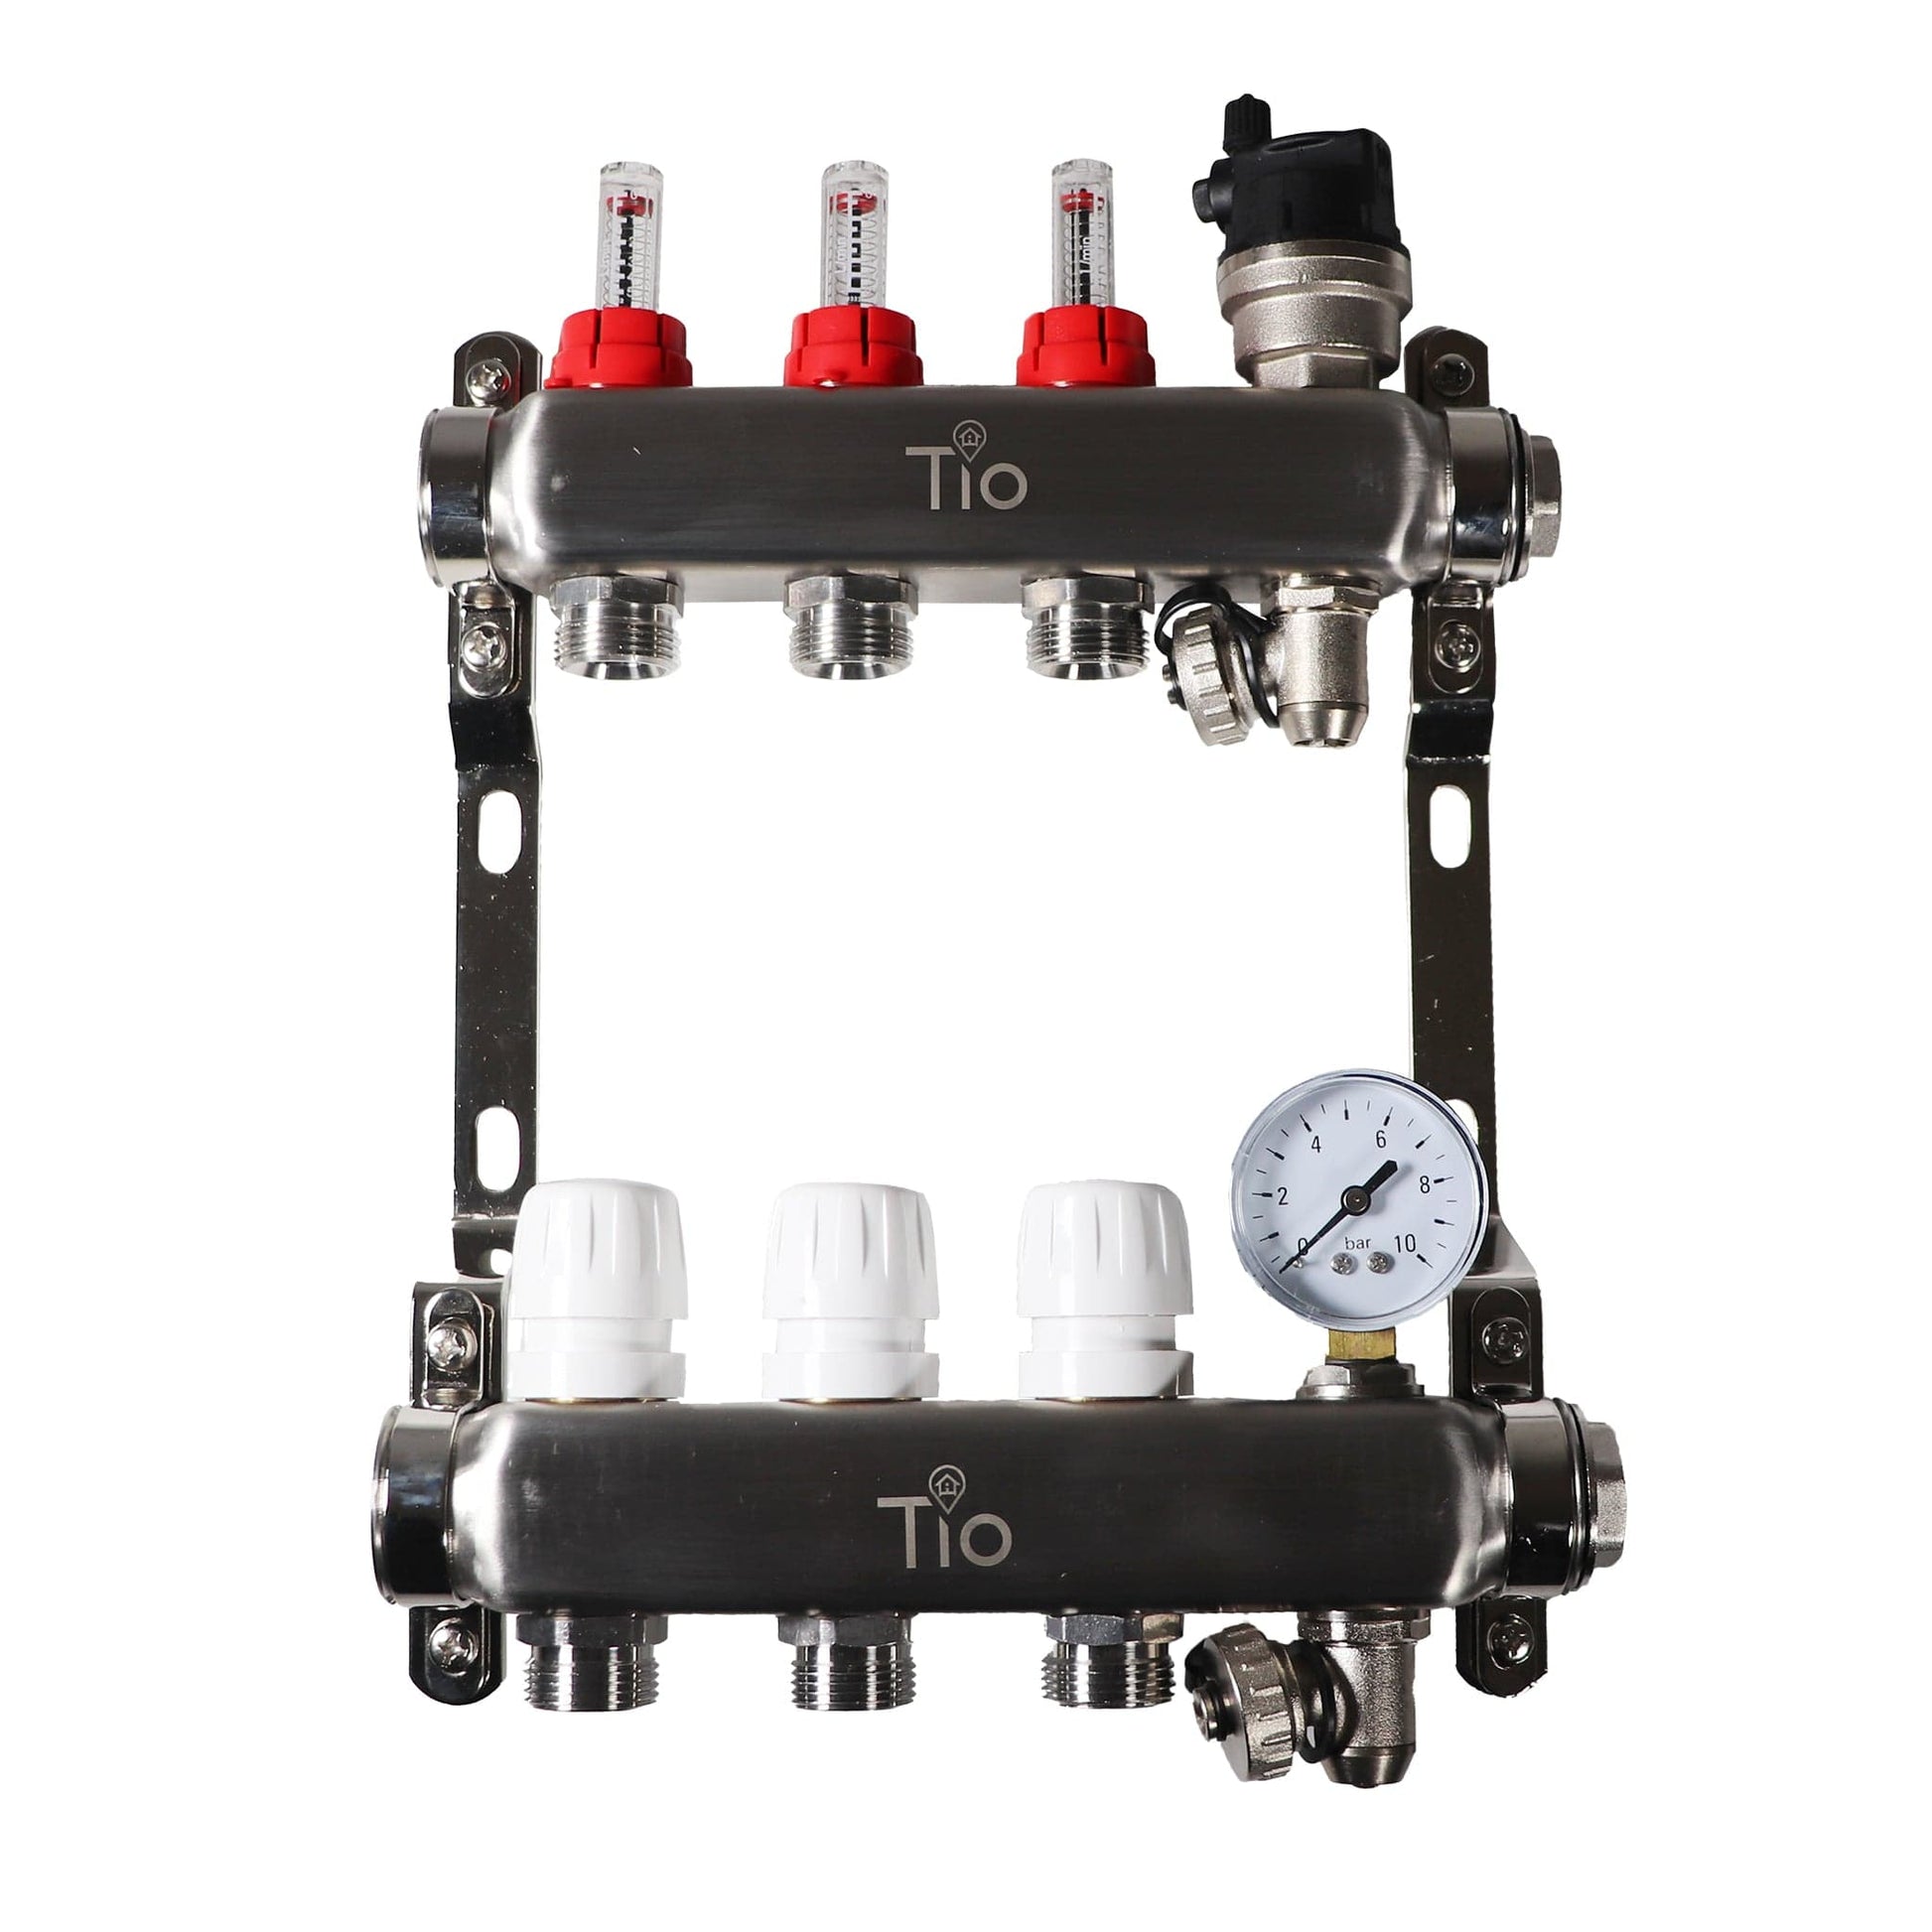 Tio 3 Port Manifold With Pressure Gauge & Auto Air Vent | TIOMAN0003 BM01774